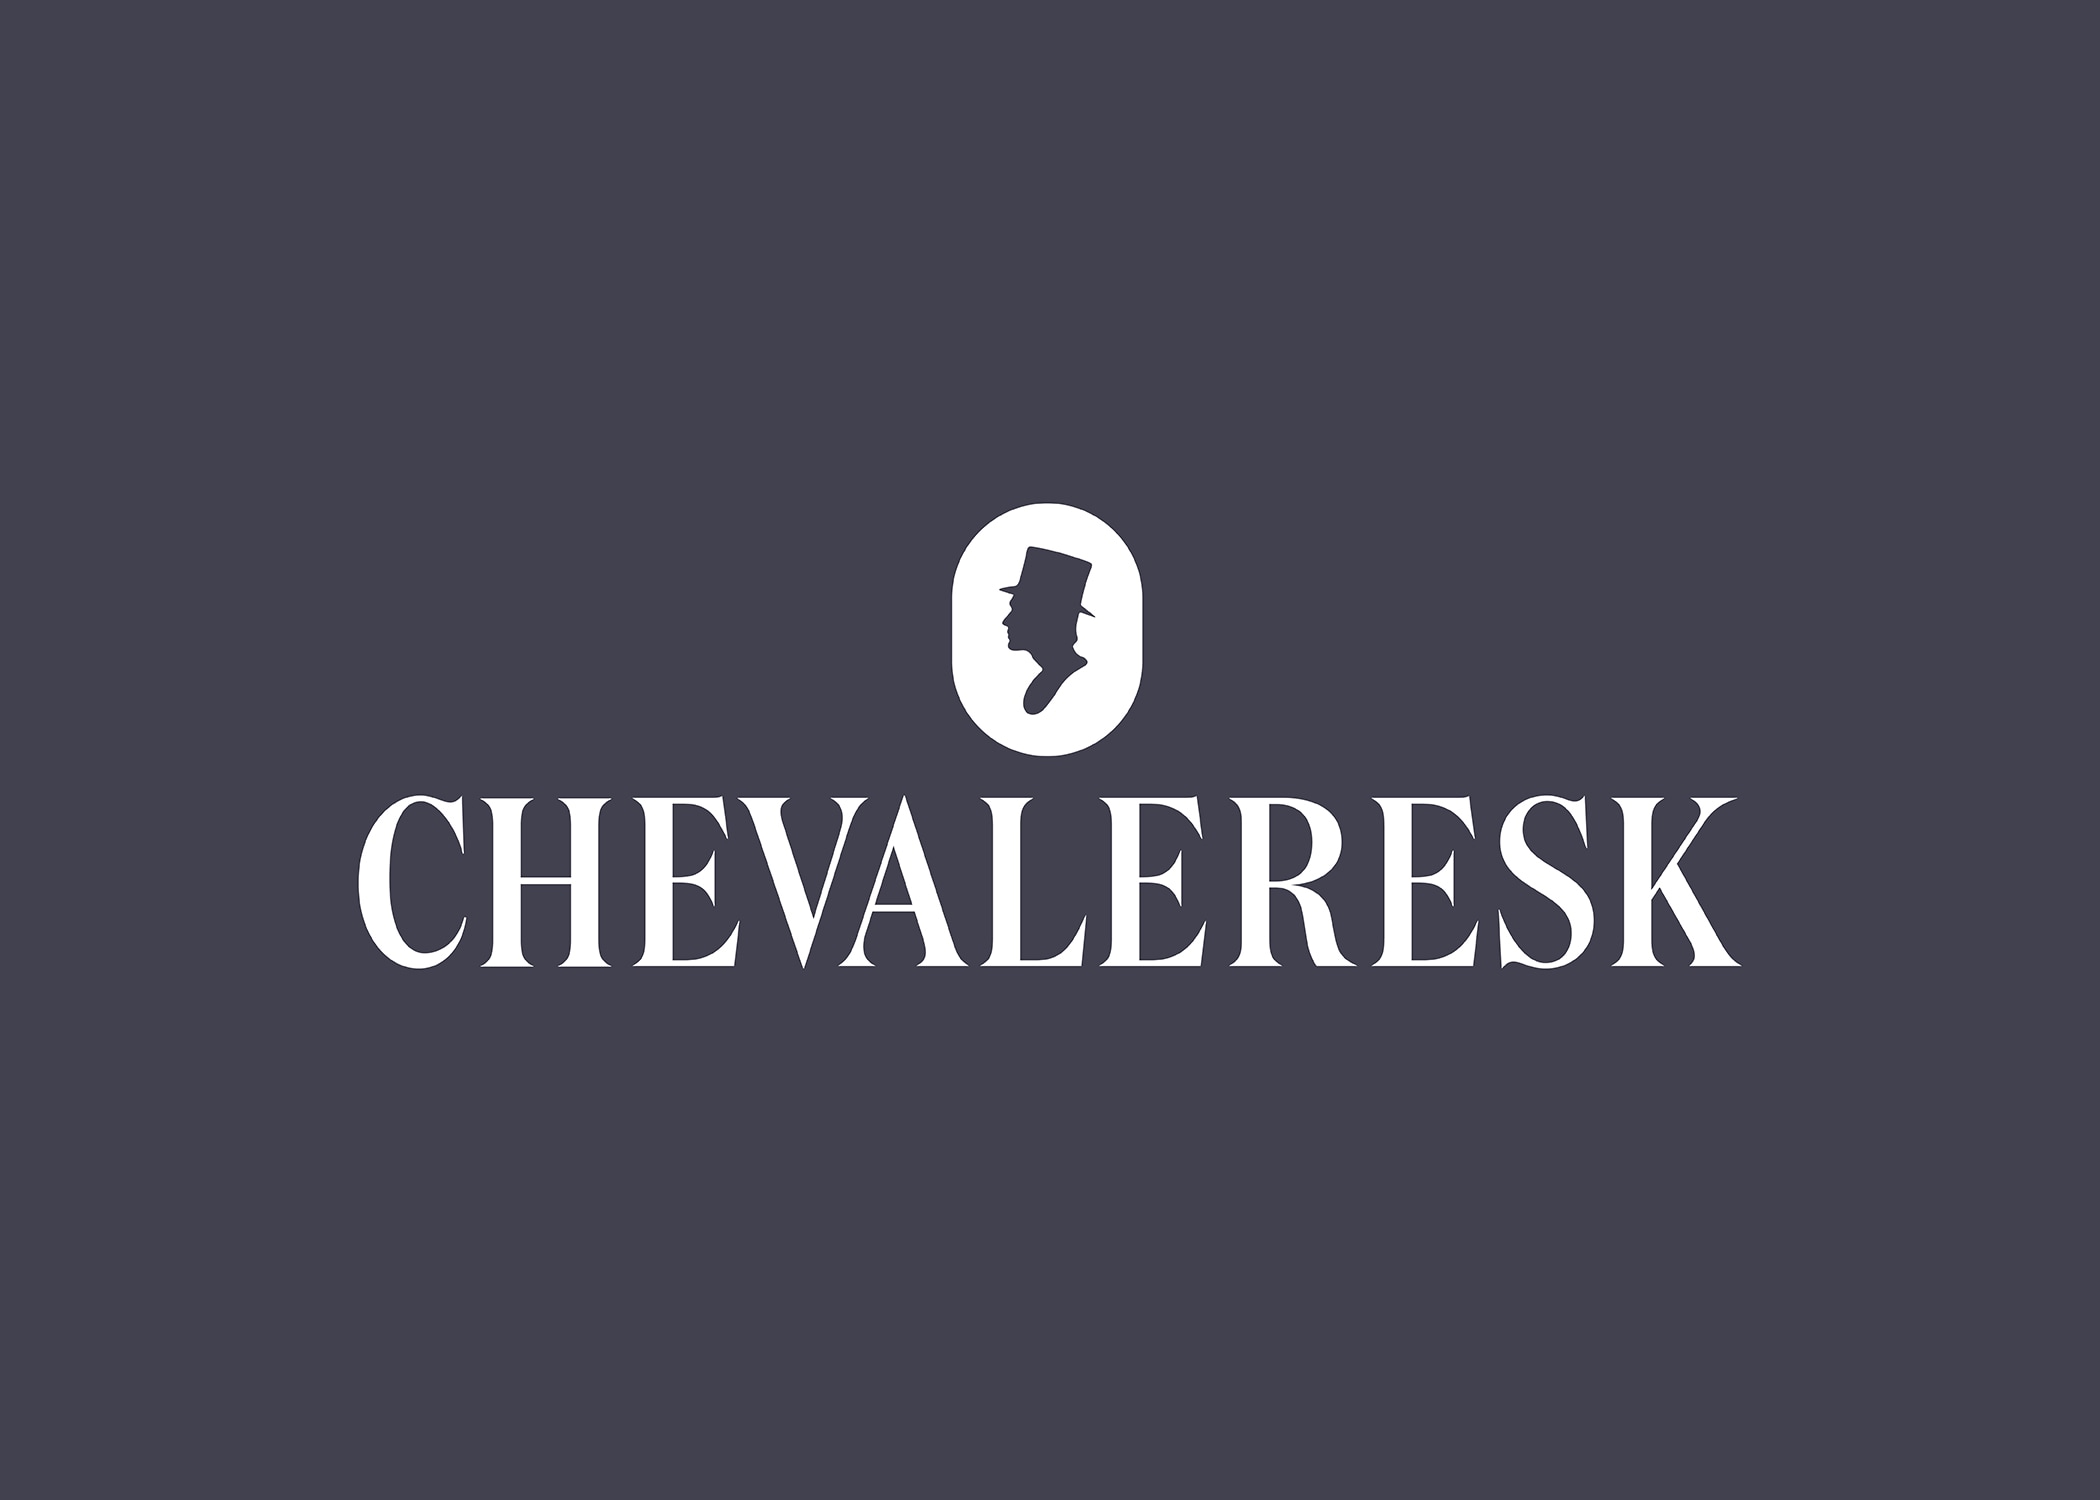 Chevaleresk